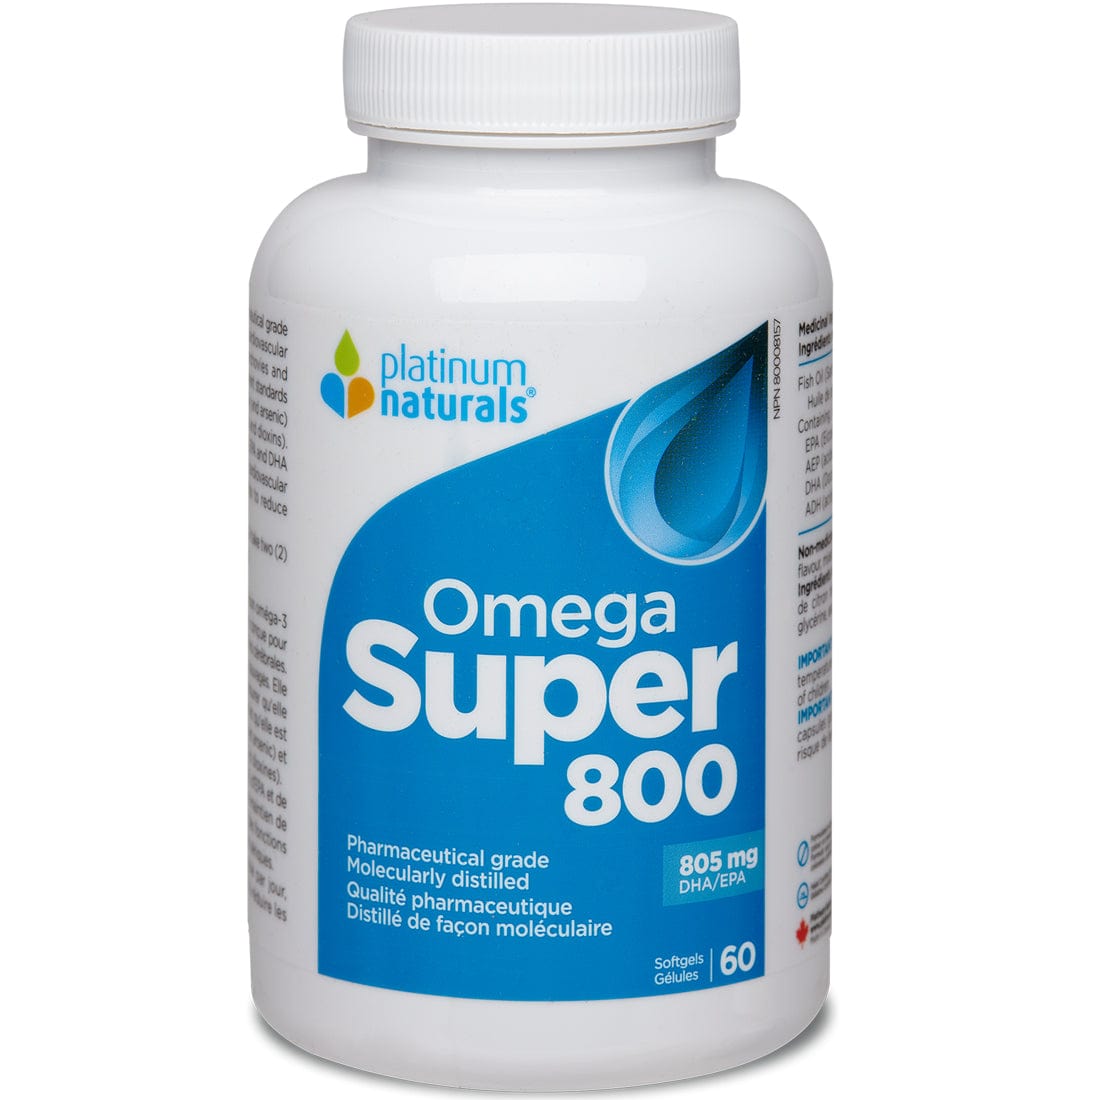 Platinum Naturals Omega Pure Super 800